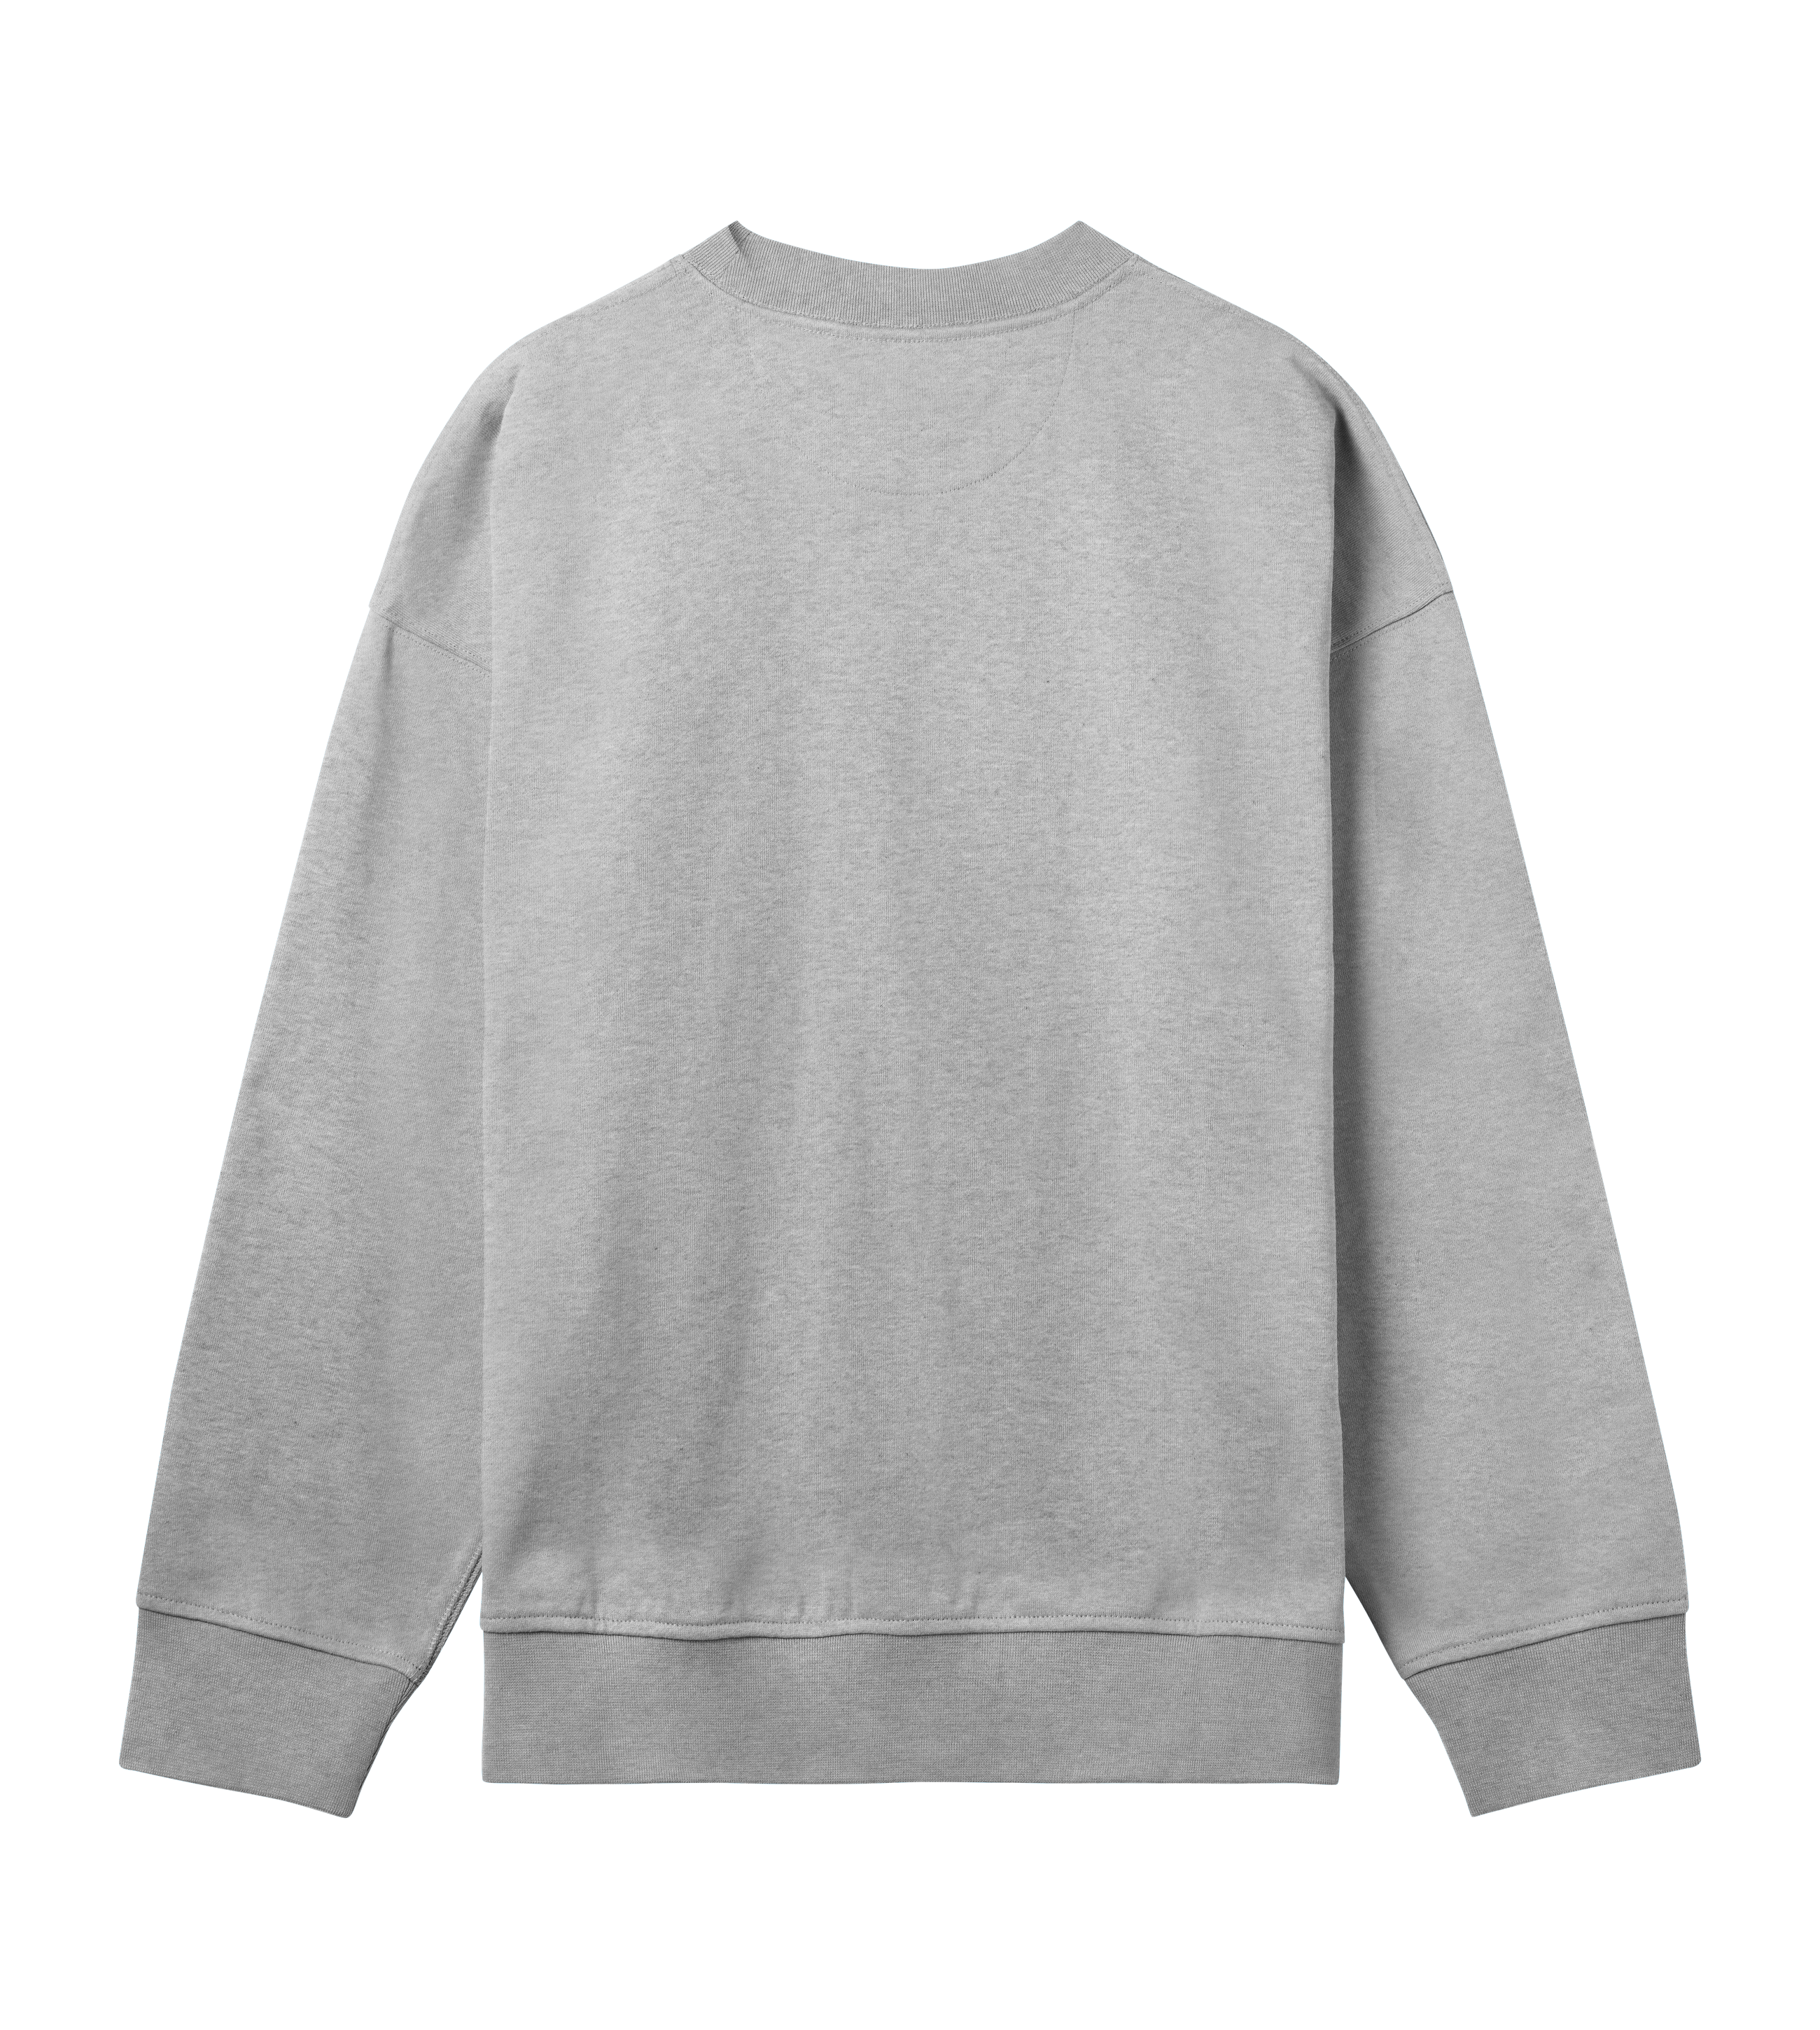 sweatshirt-grey-back_2c613fe2-ed15-4dbe-b756-75cf1312eec6.png